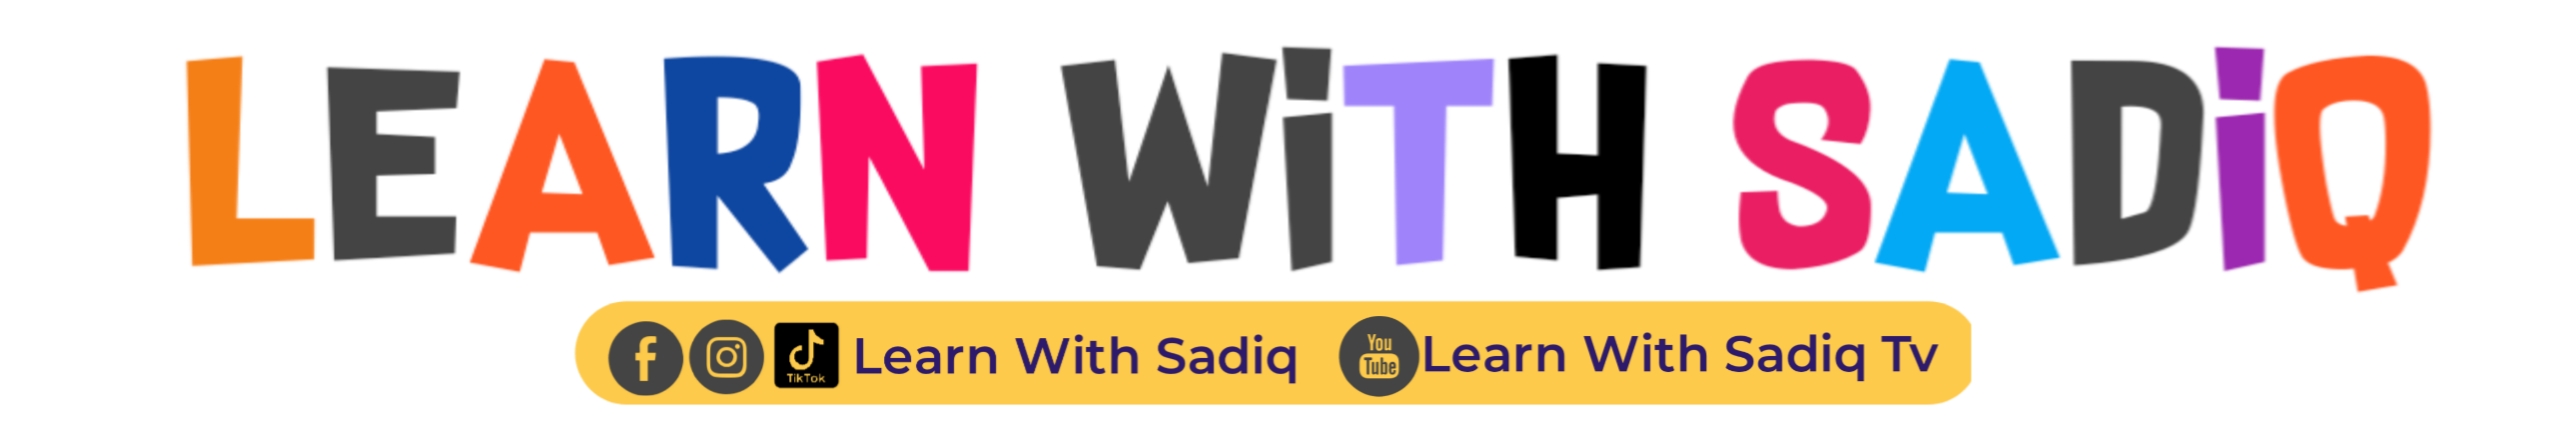 Learn With Sadiq - Tech